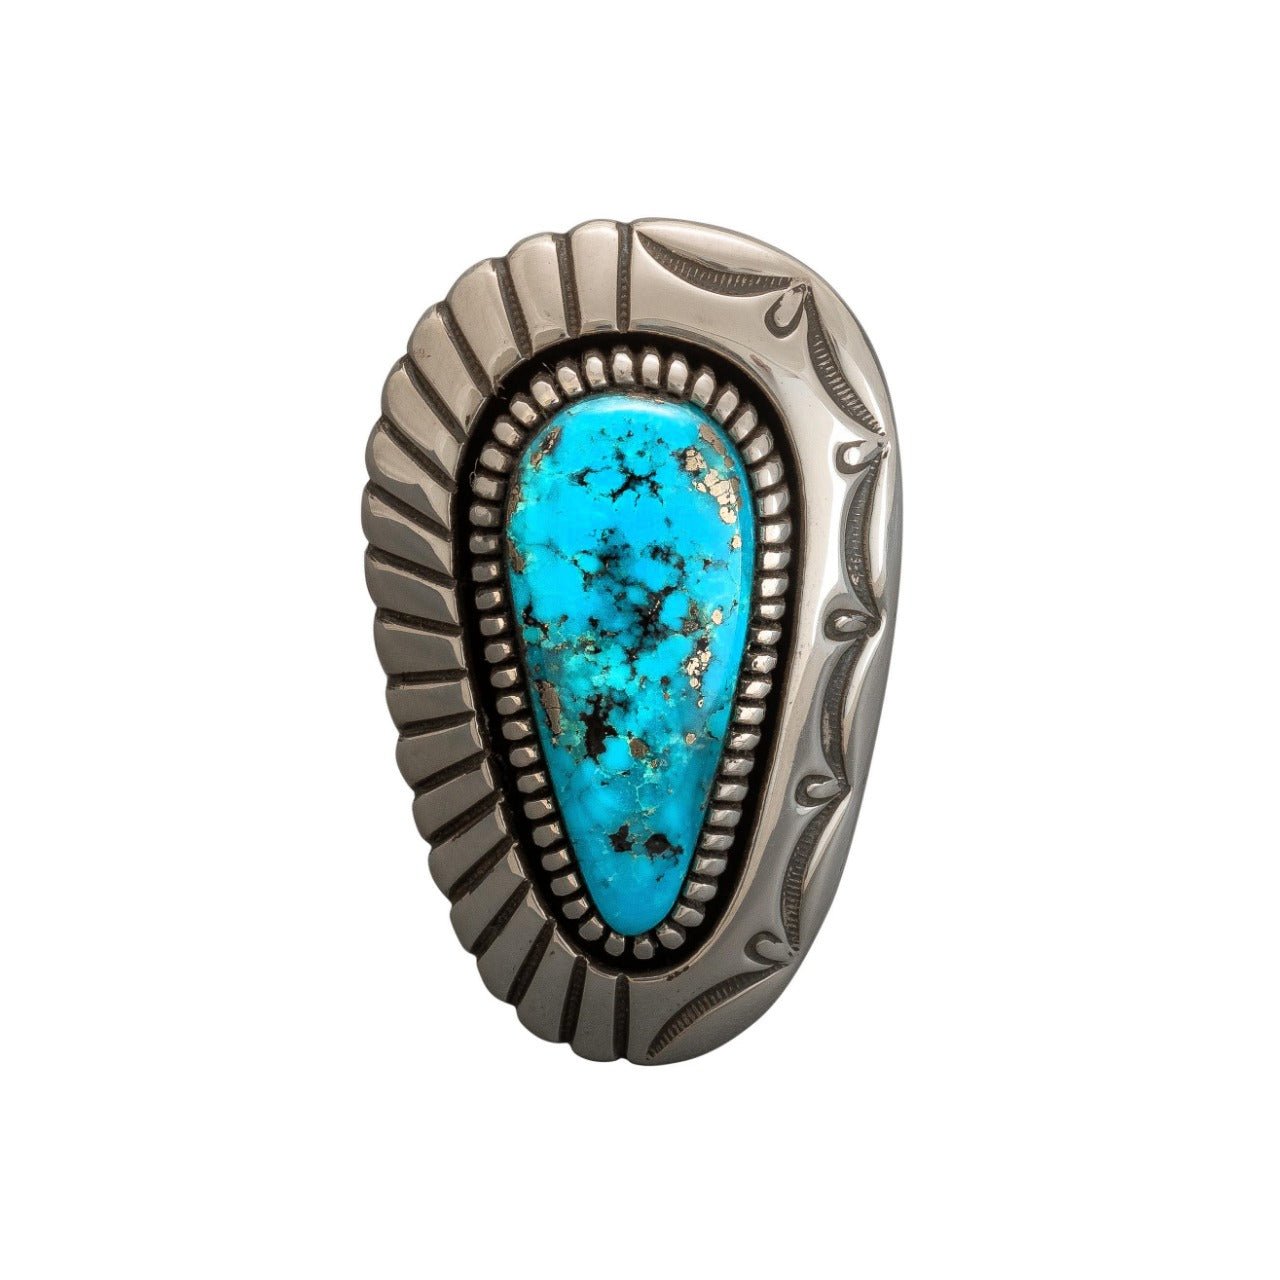 Large Ring by Jennifer Curtis of Natural Morenci Turquoise - Turquoise & Tufa